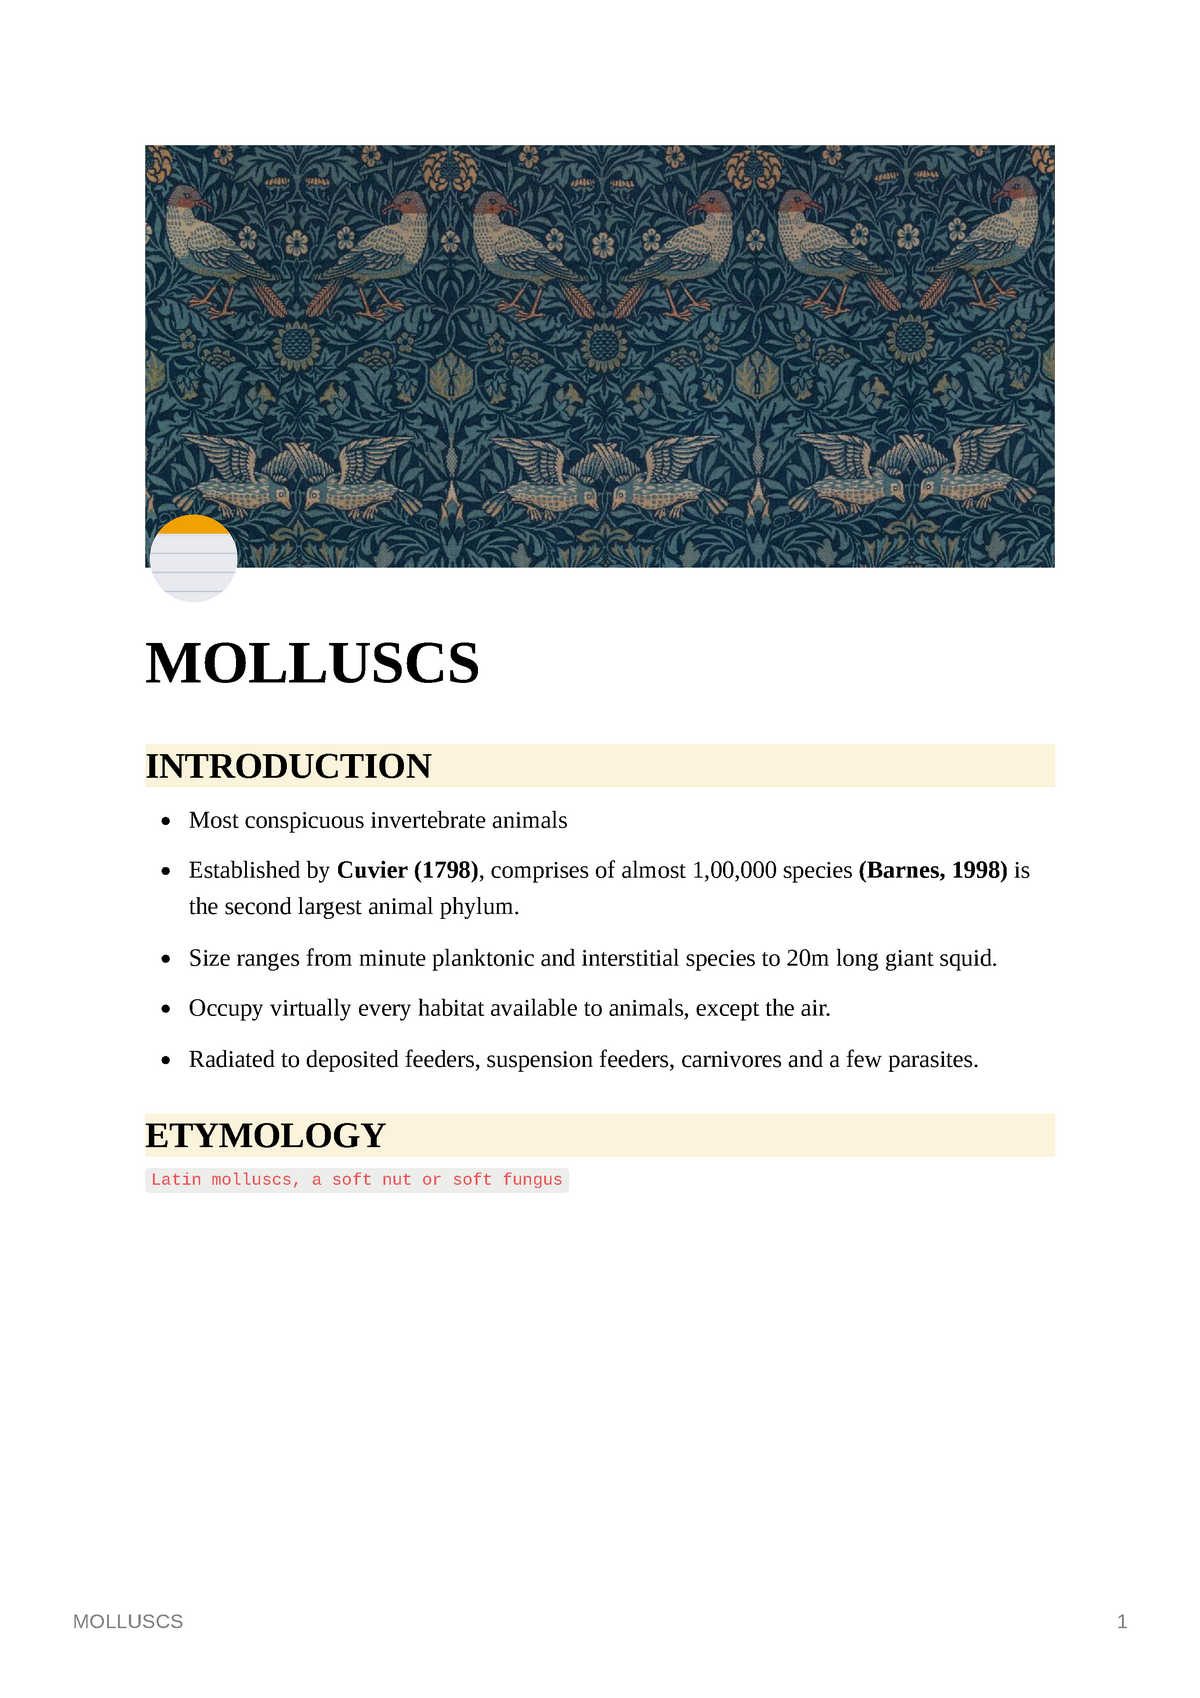 MOLLUSCA-INVERTEBRATE ZOOLOGY - MOLLUSCS INTRODUCTION Most conspicuous  invertebrate animals - Studocu